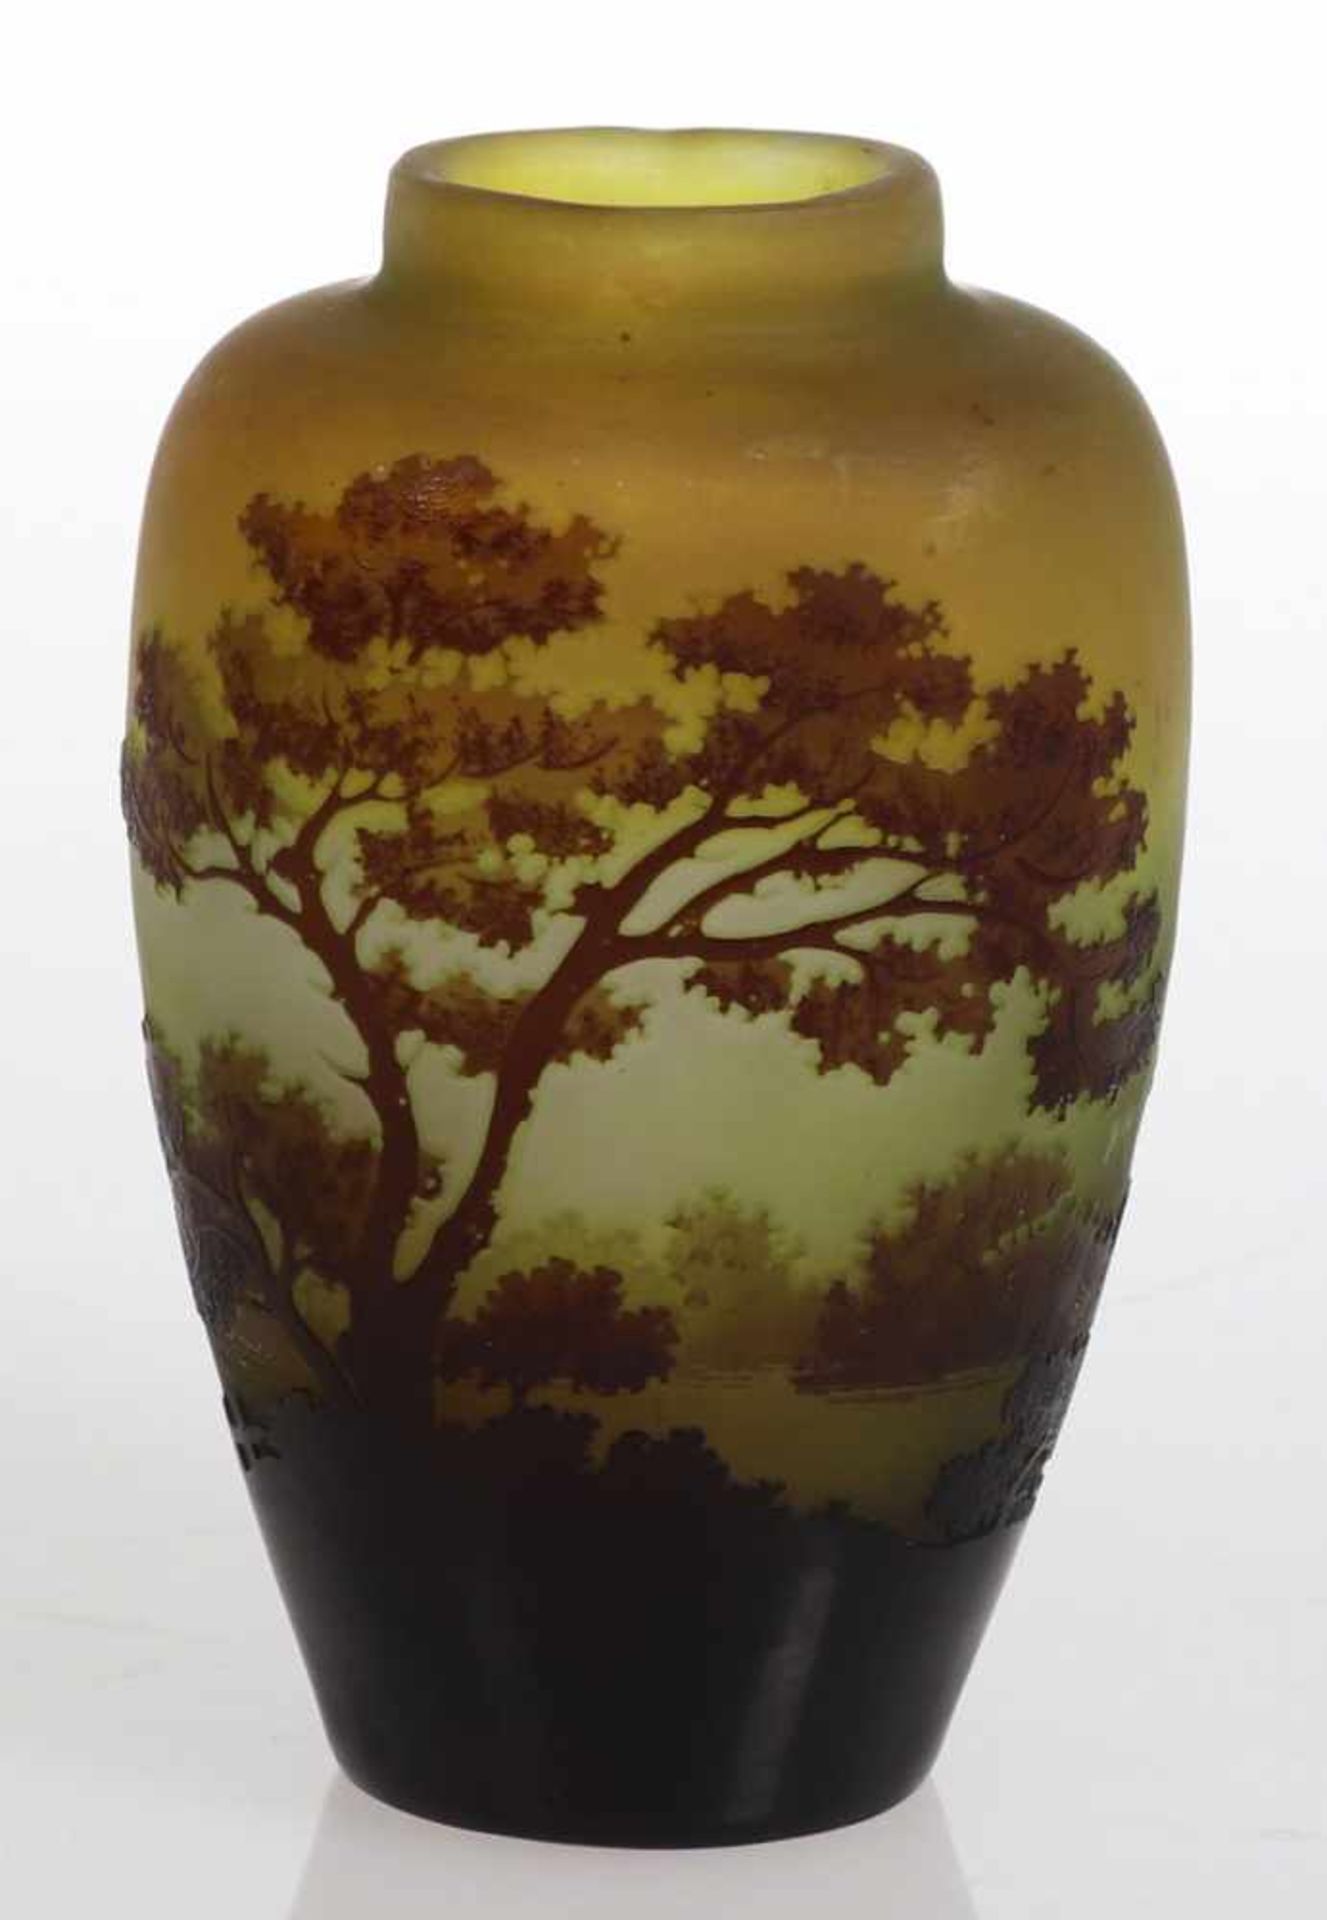 Flachovale Vase - Flusslandschaft mit BäumenÉmile Charles Gallé, Nancy 1920-1925. Opakweißes Glas